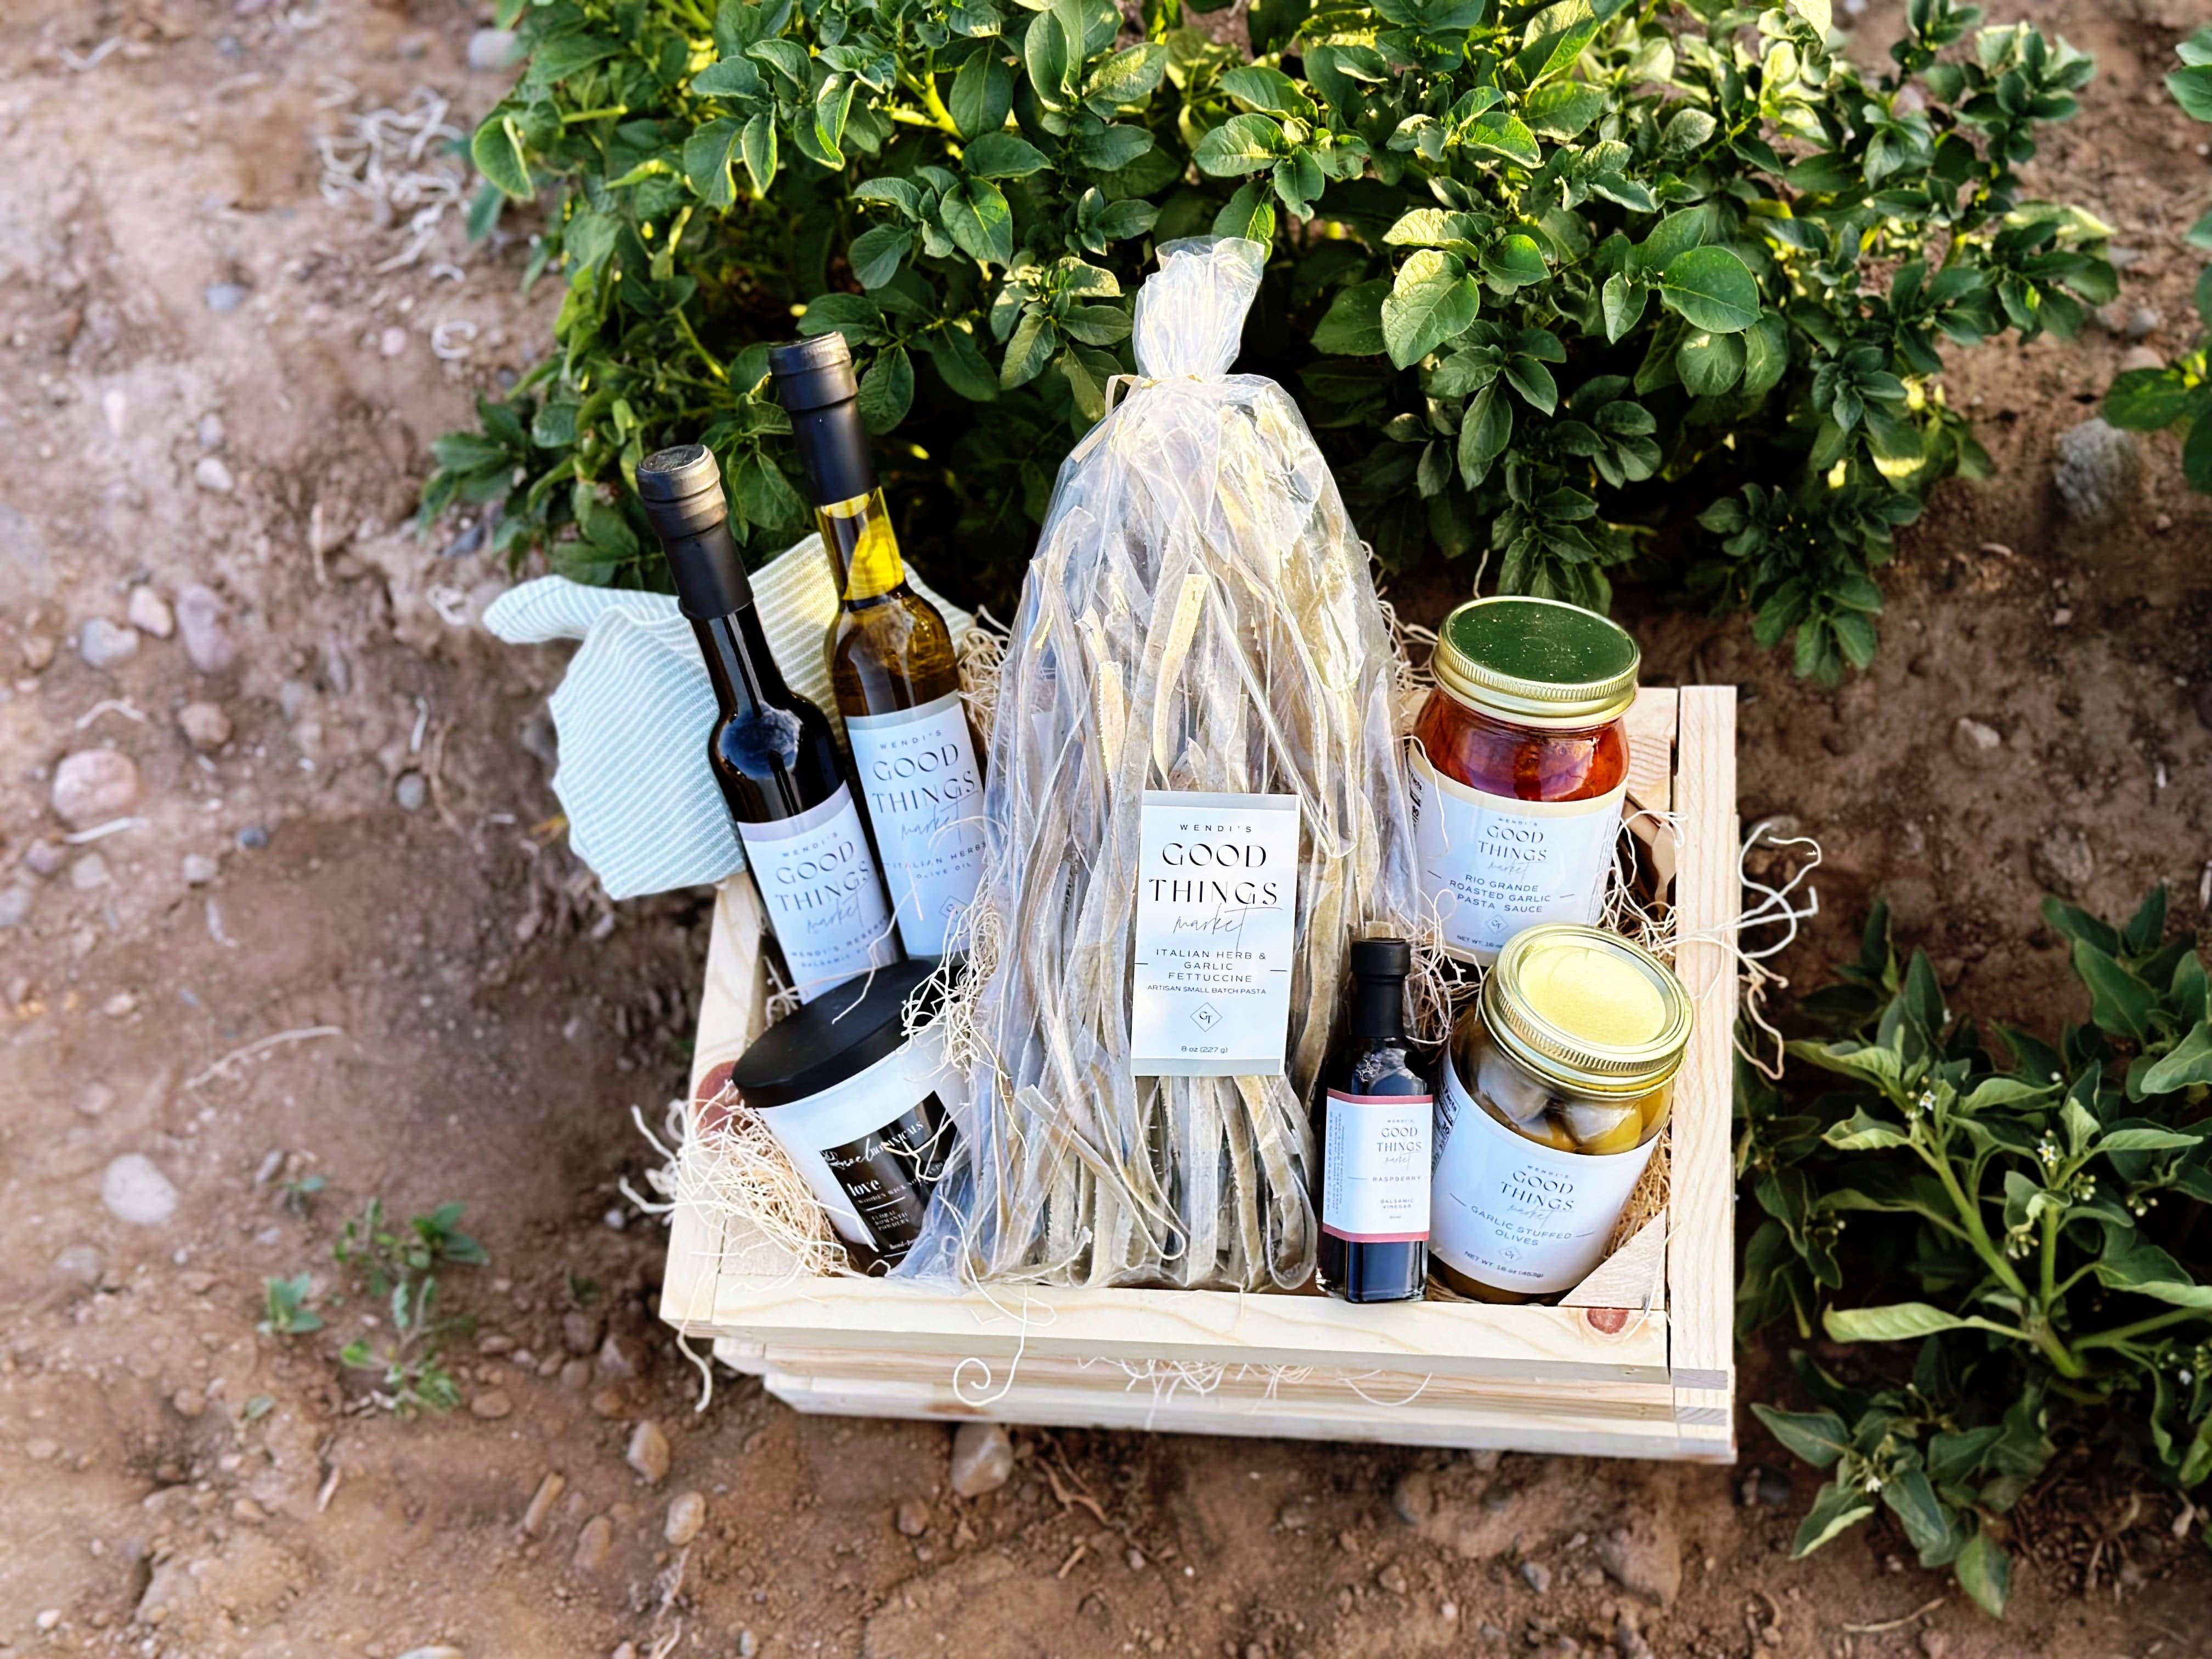 gourmet Italian gift baskets, Wendi's Good Things Market